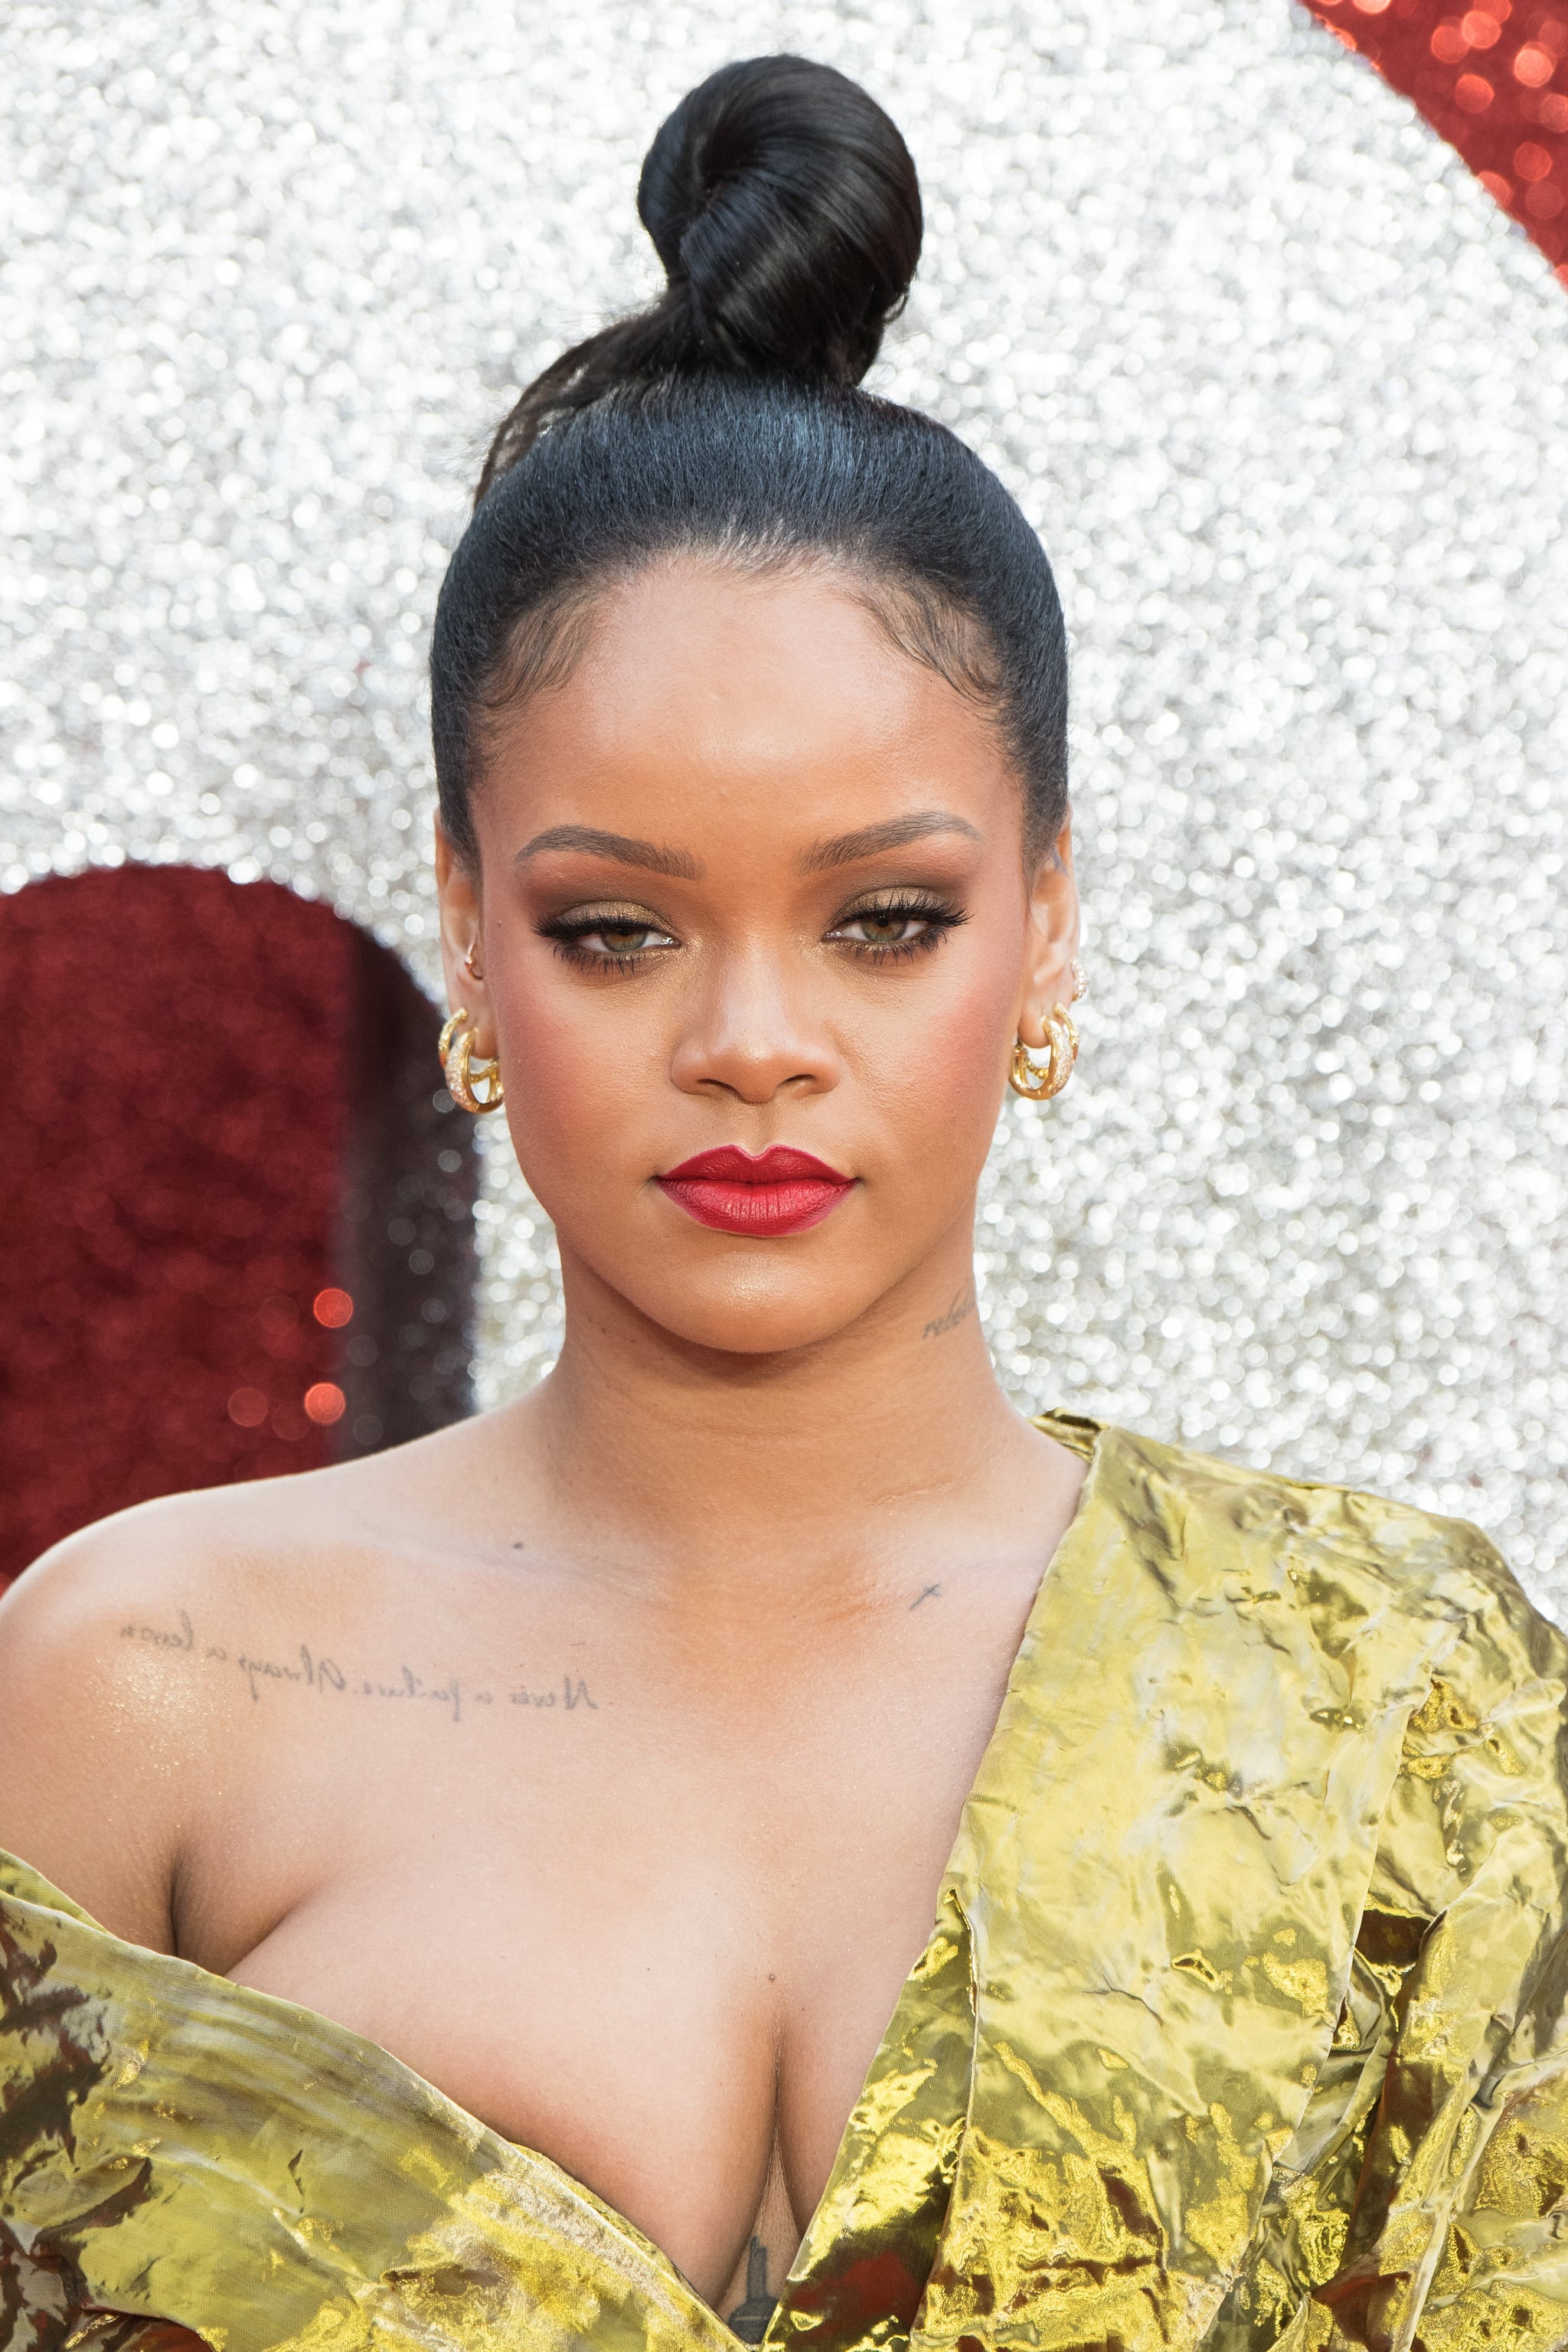 Sexy Rihanna Pictures Popsugar Celebrity